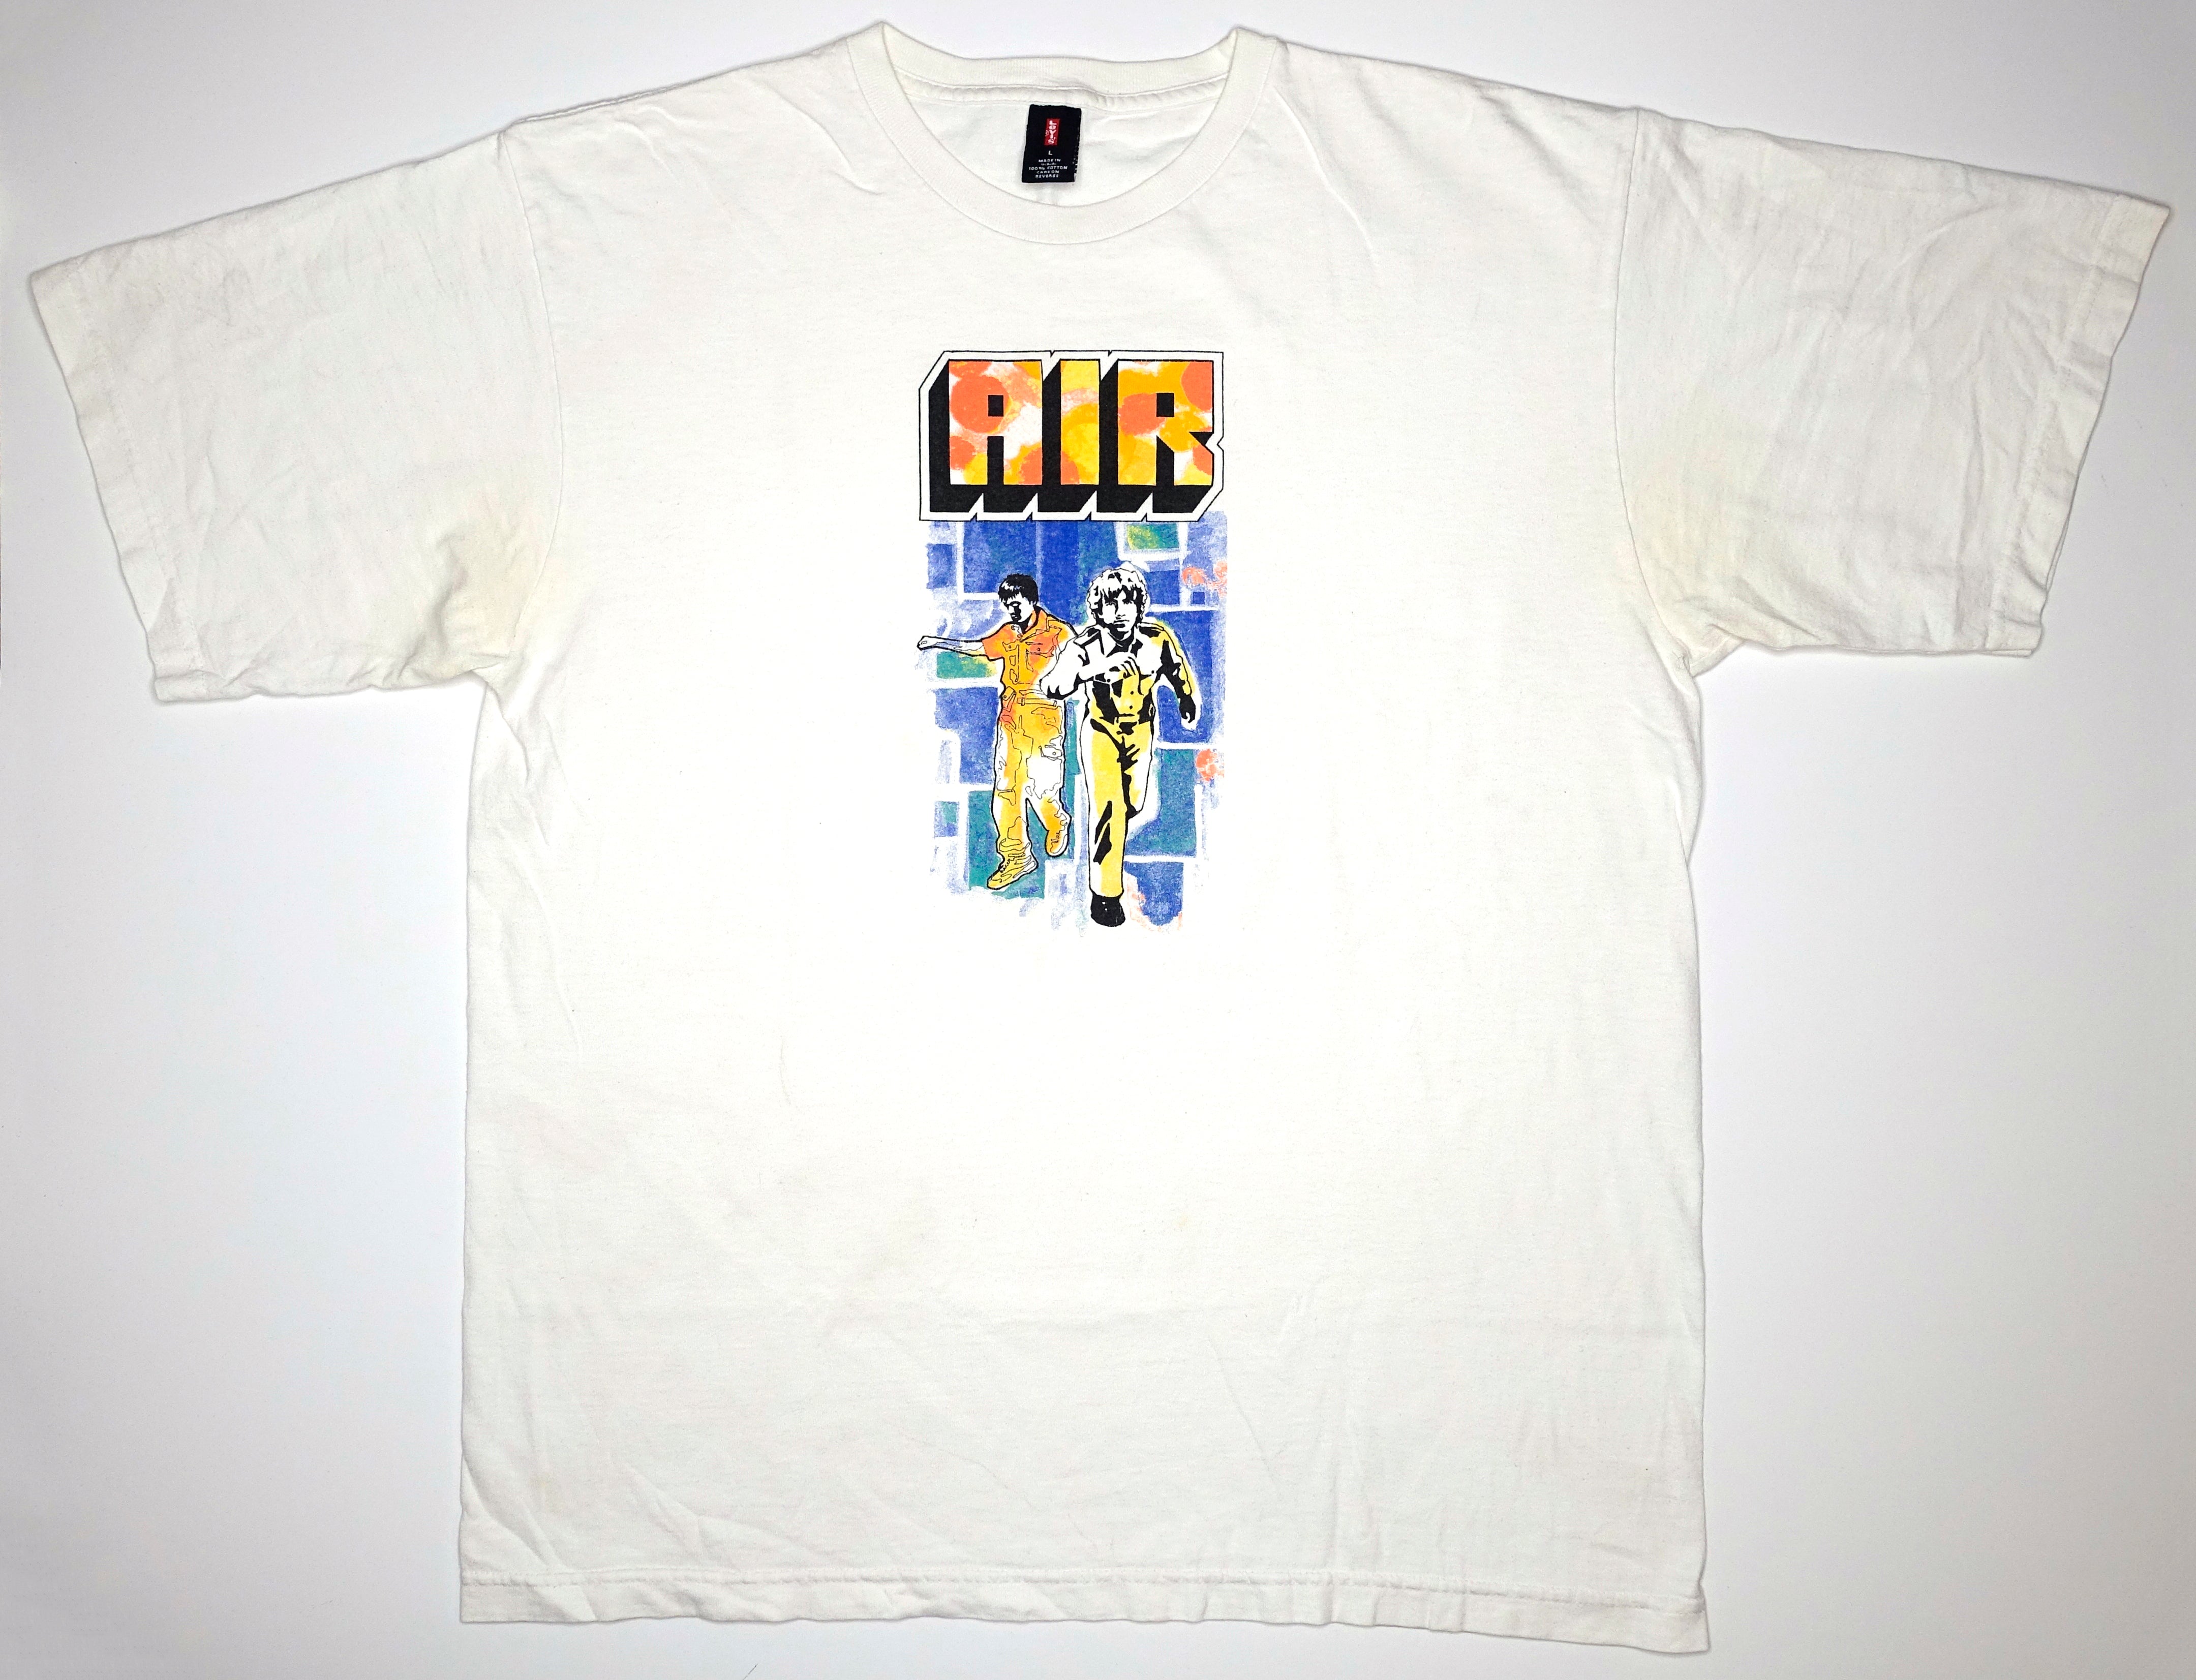 Air - Moon Safari / Mike Mills 2001 Tour Shirt Size Large